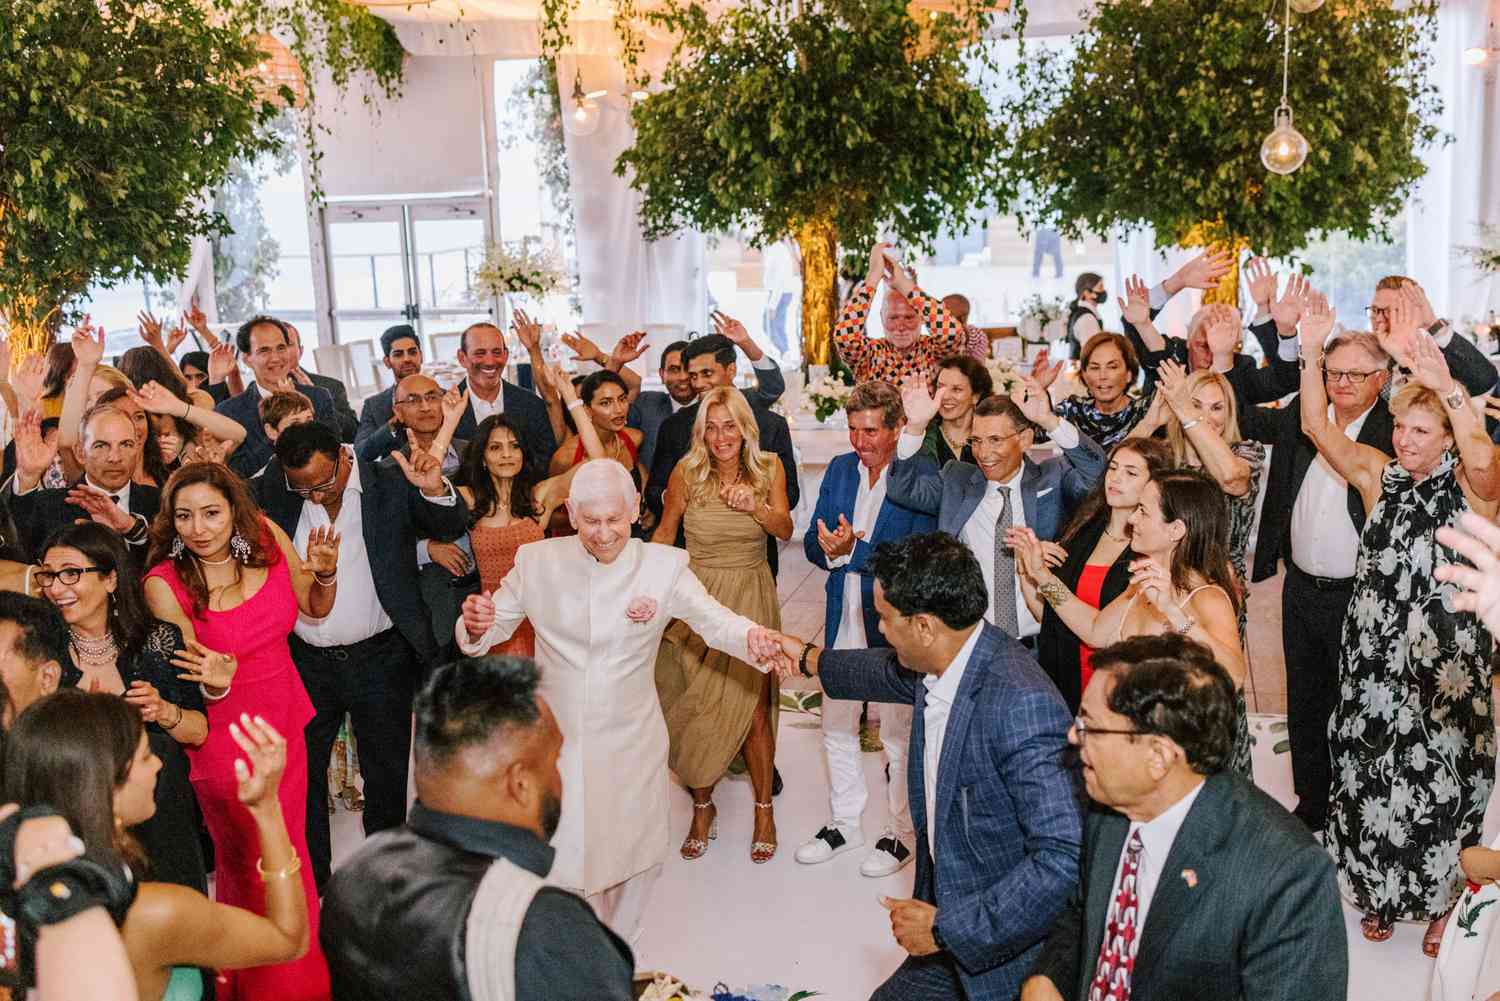 wedding guests dancing at wedding reception